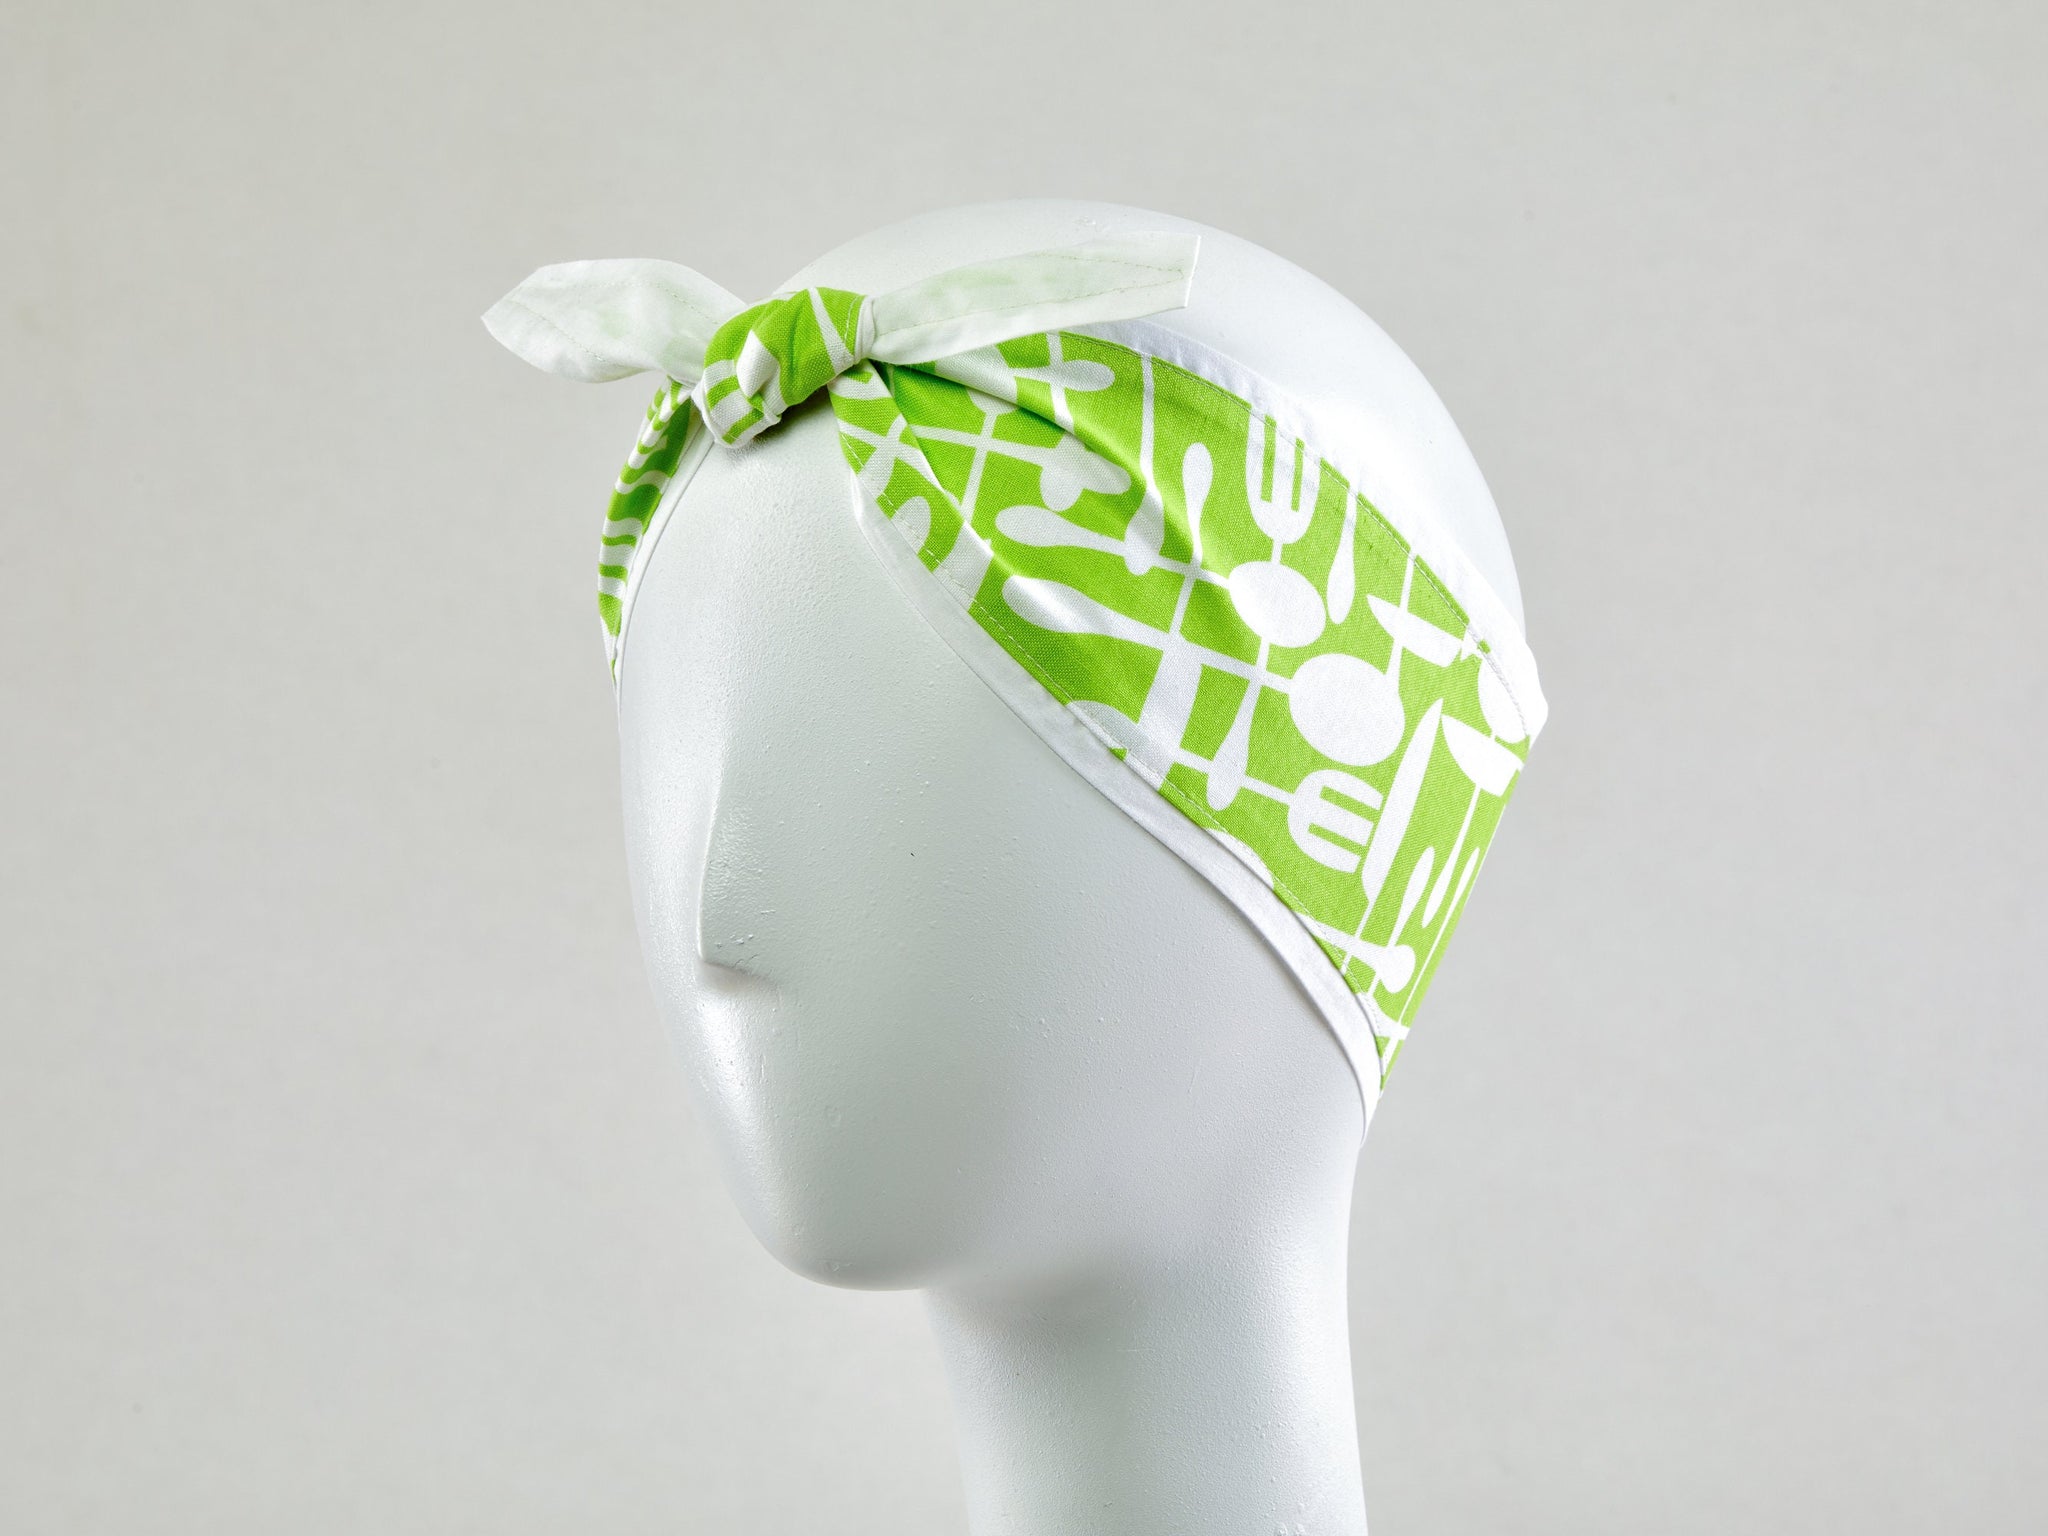 1950s Style Pin-up Girl Head wrap, 100% Cotton Reversible Headband